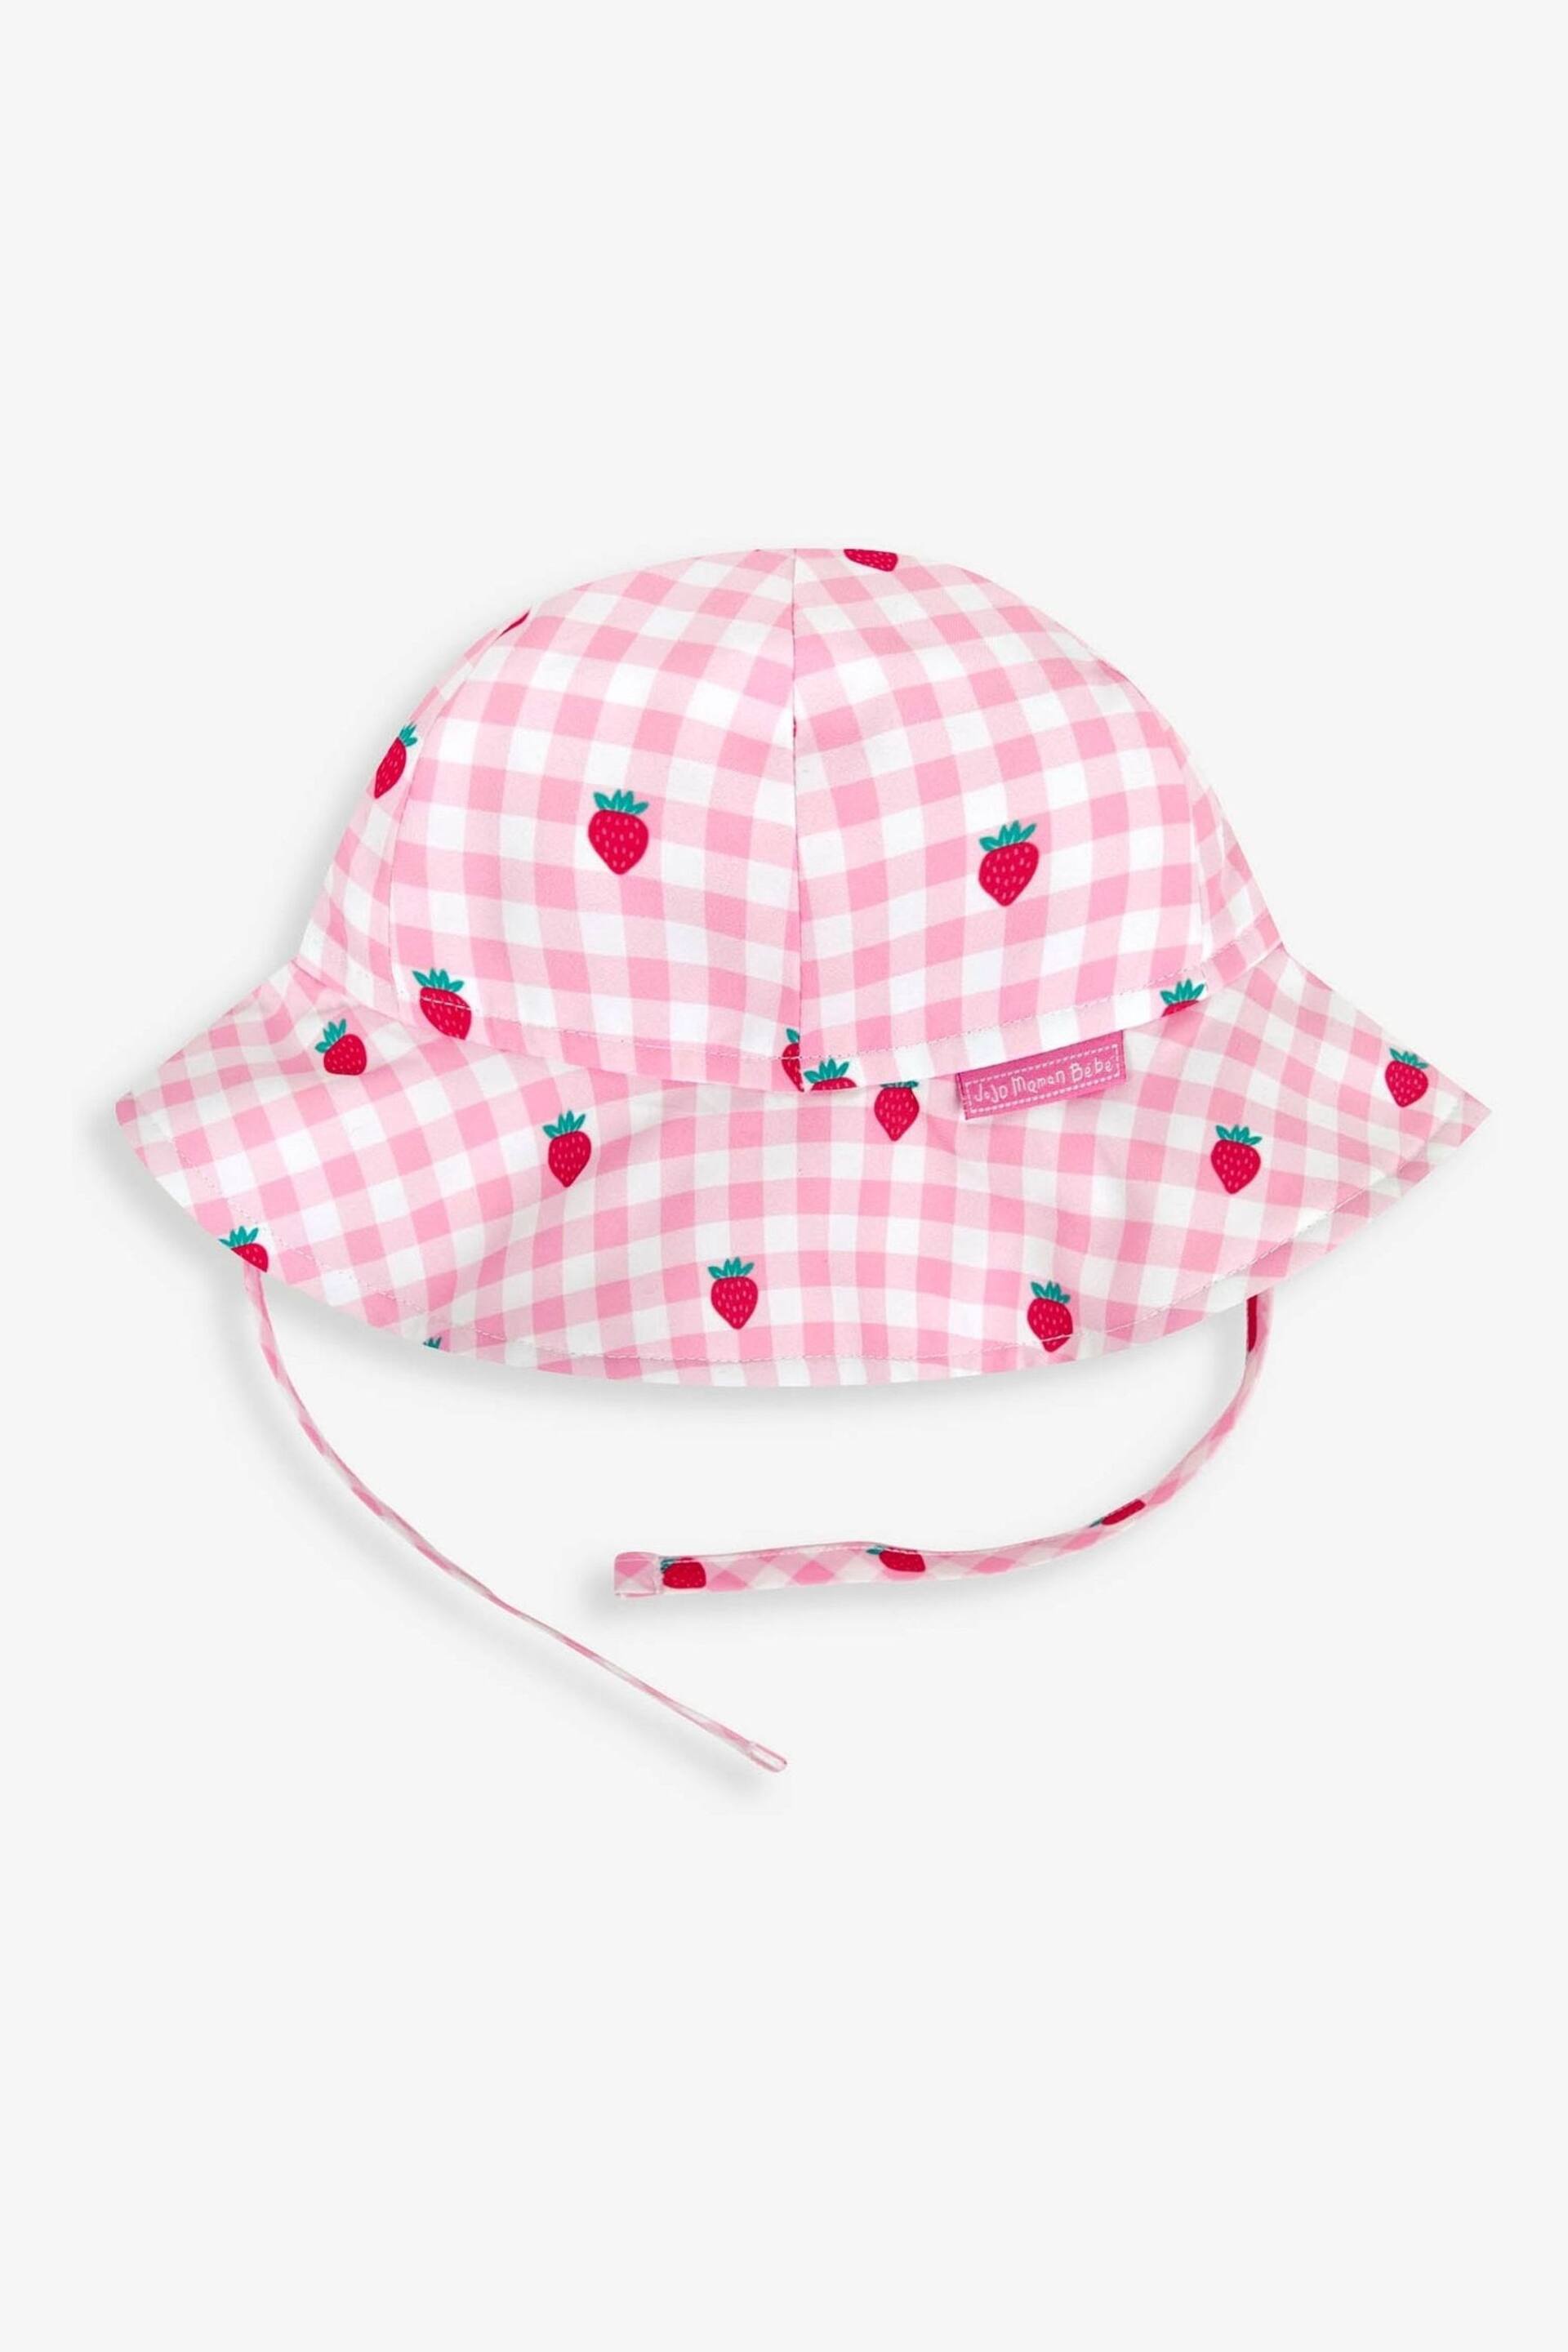 JoJo Maman Bébé Pink Strawberry UPF 50 Floppy Sun Hat - Image 2 of 3